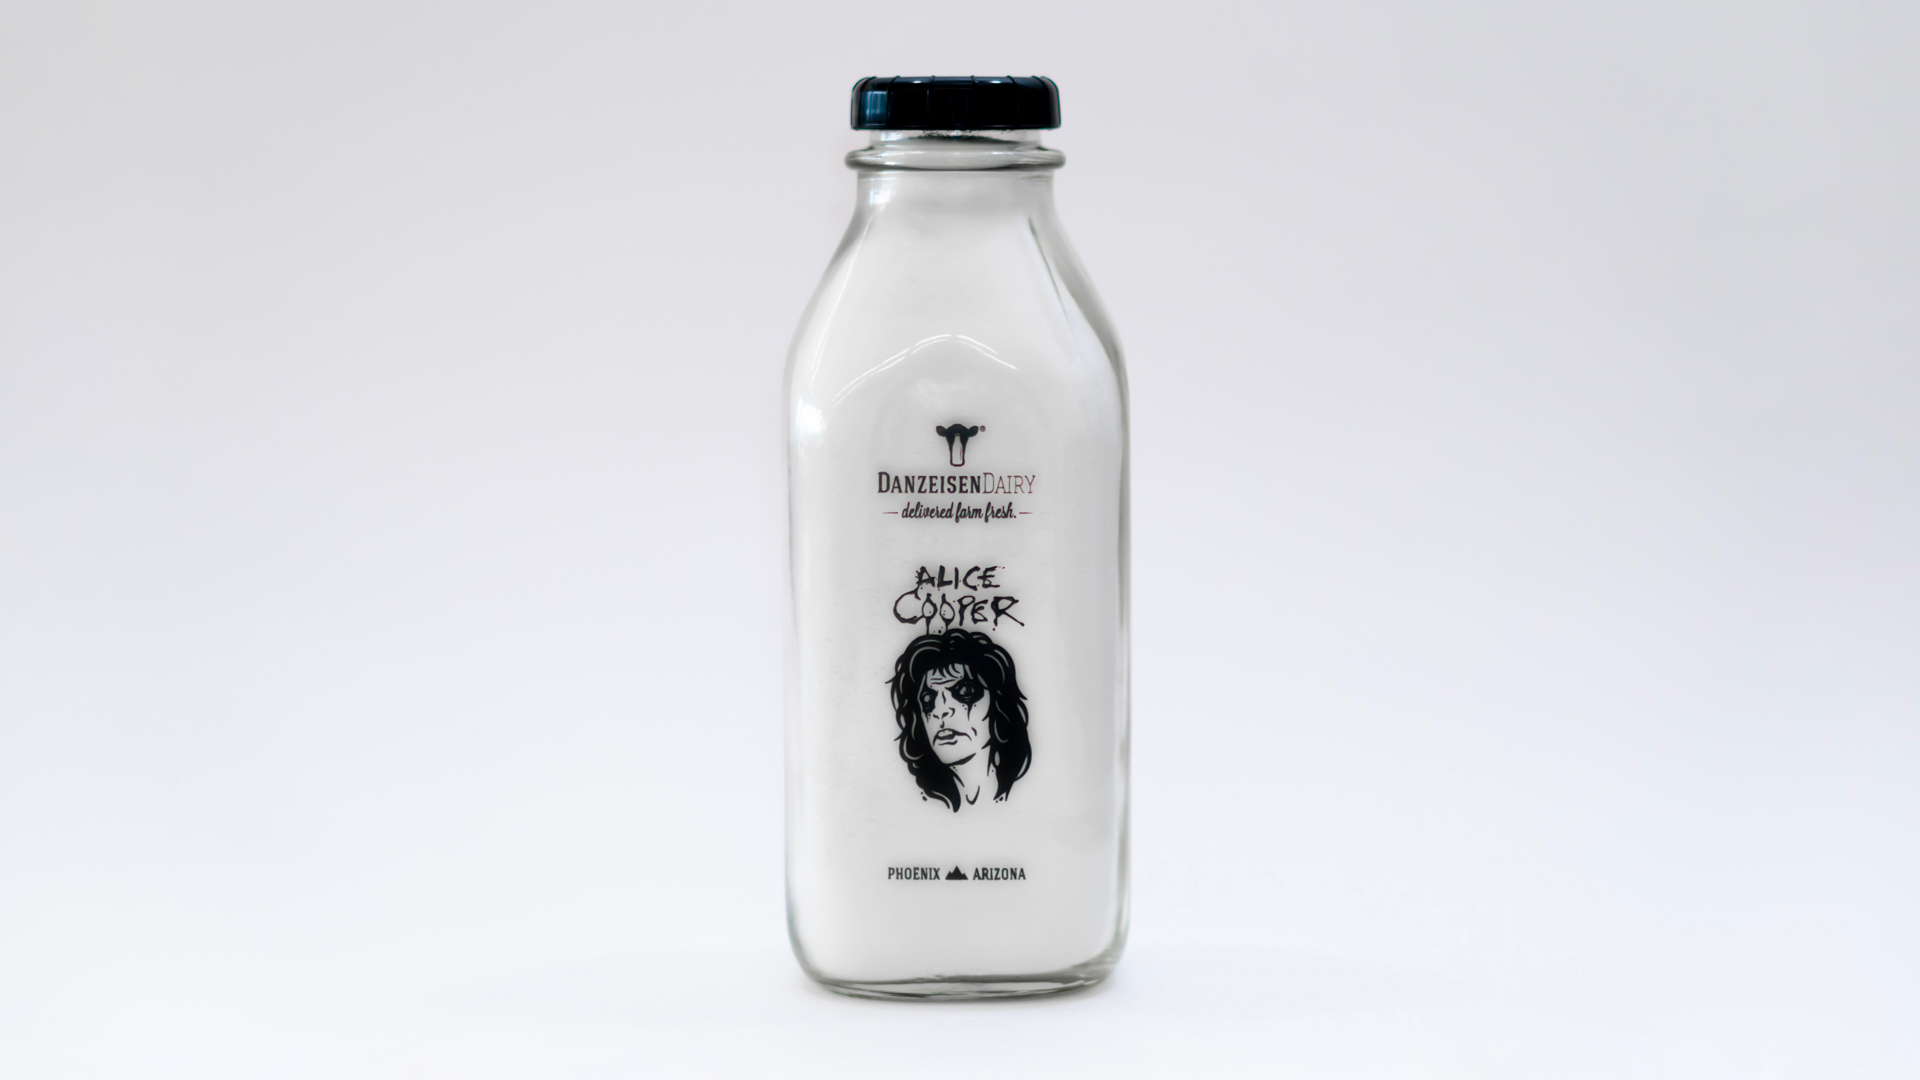 featured image two:Danzeisen Dairy / Alice Cooper Bottle